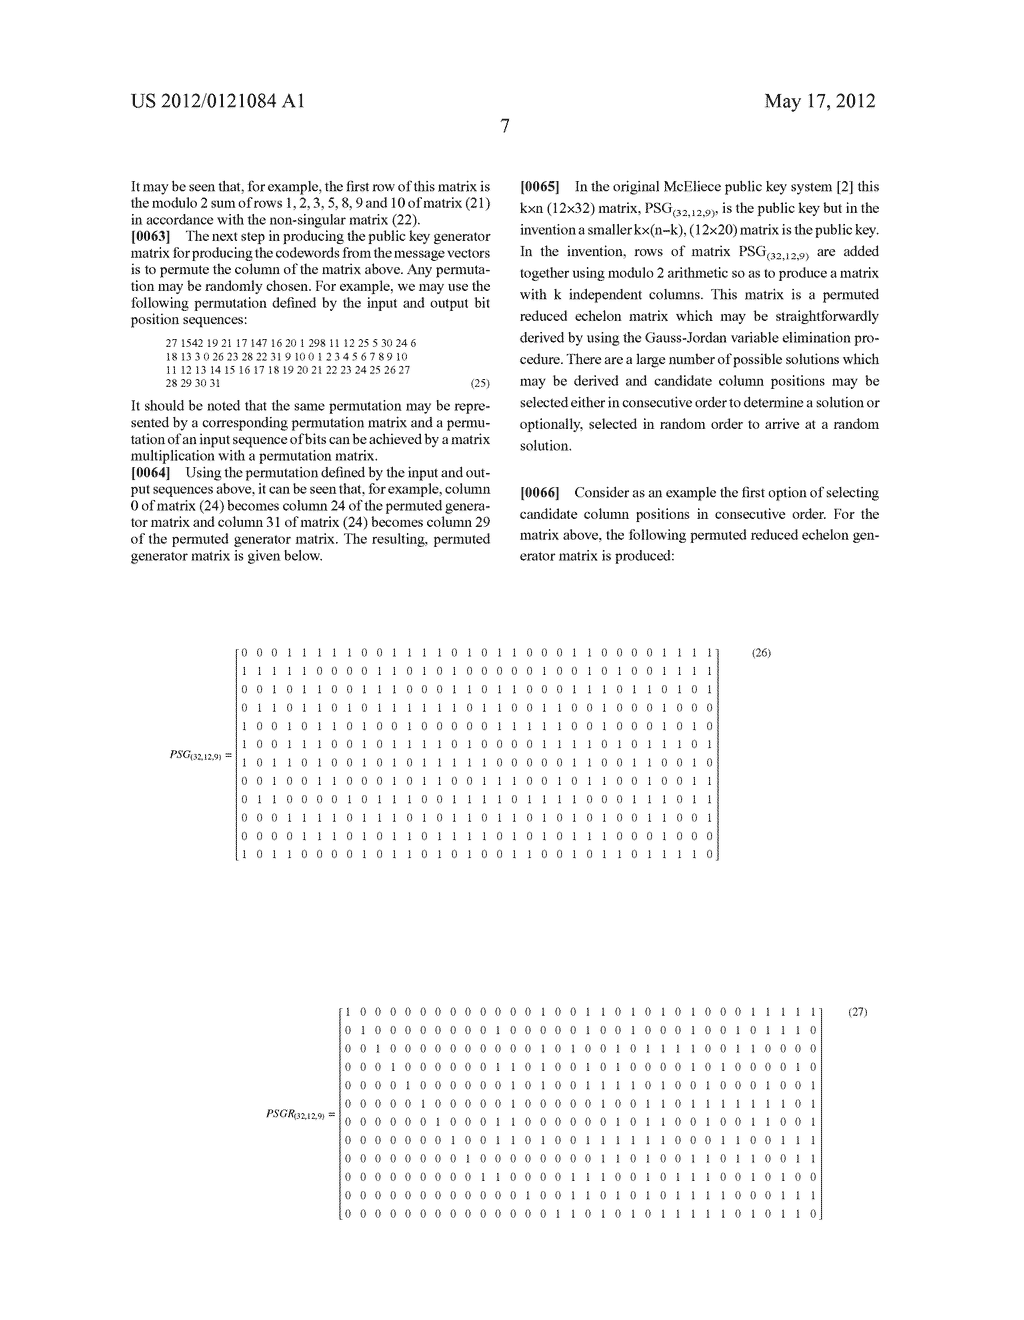 PUBLIC KEY ENCRYPTION SYSTEM USING ERROR CORRECTING CODES - diagram, schematic, and image 30